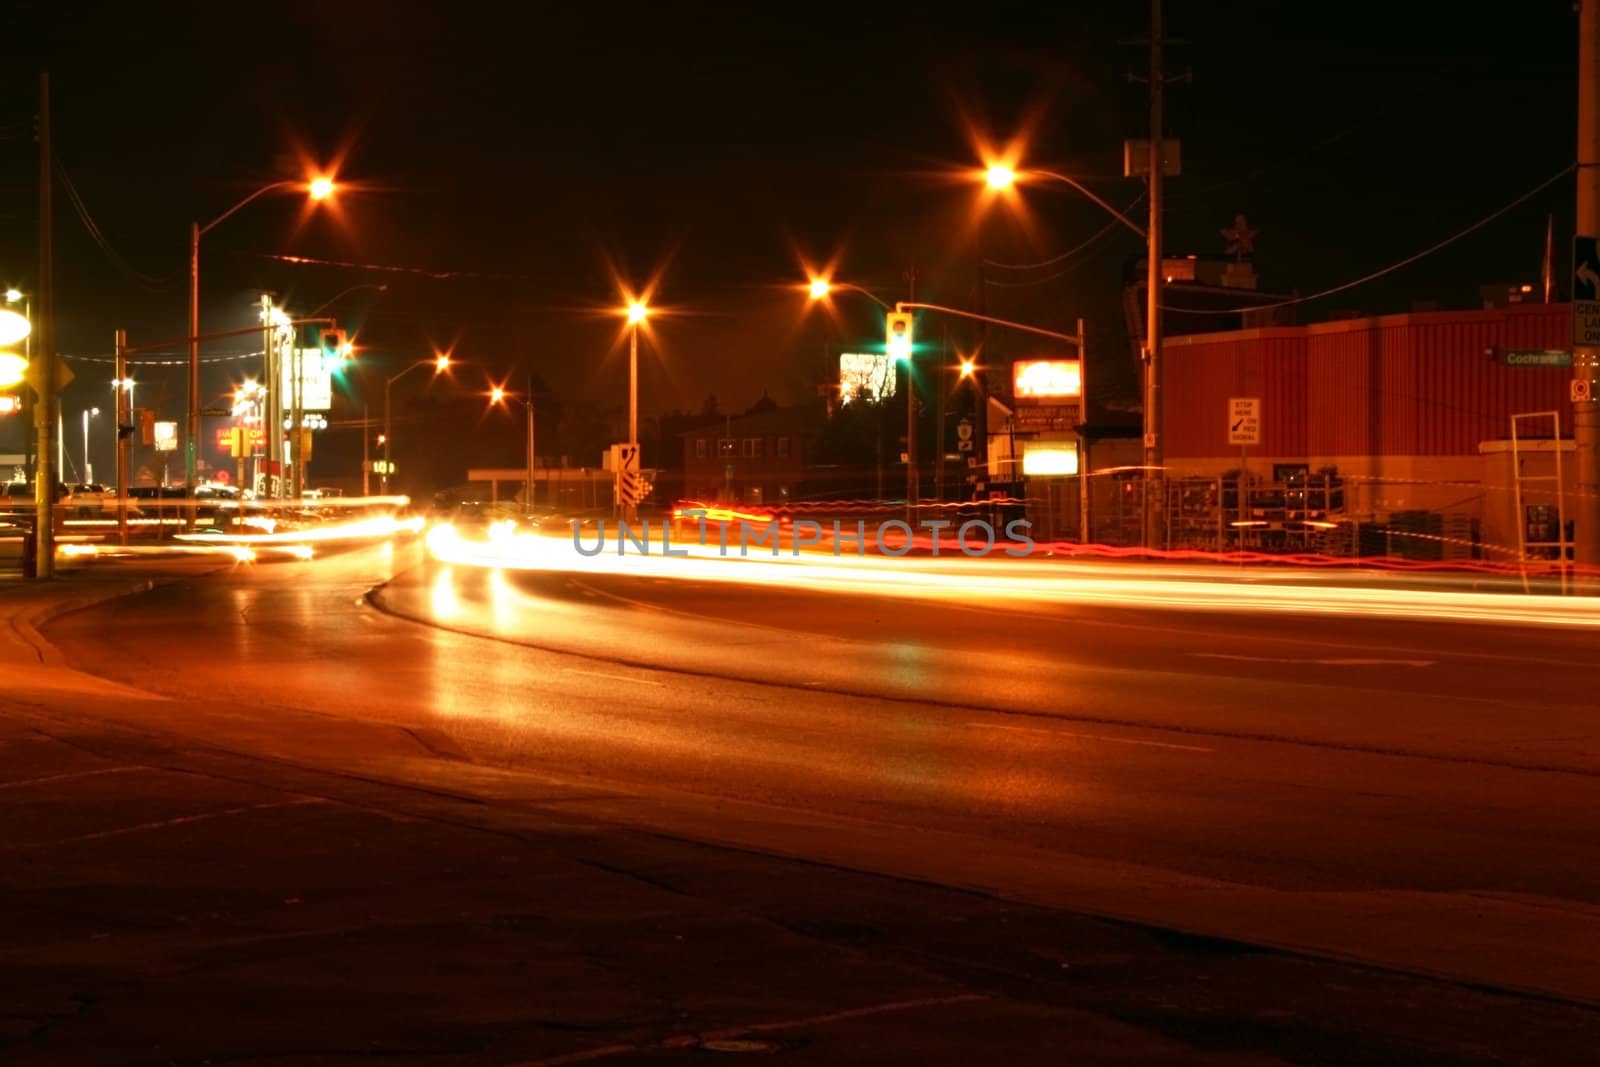 Main Street at Night by micahbowerbank